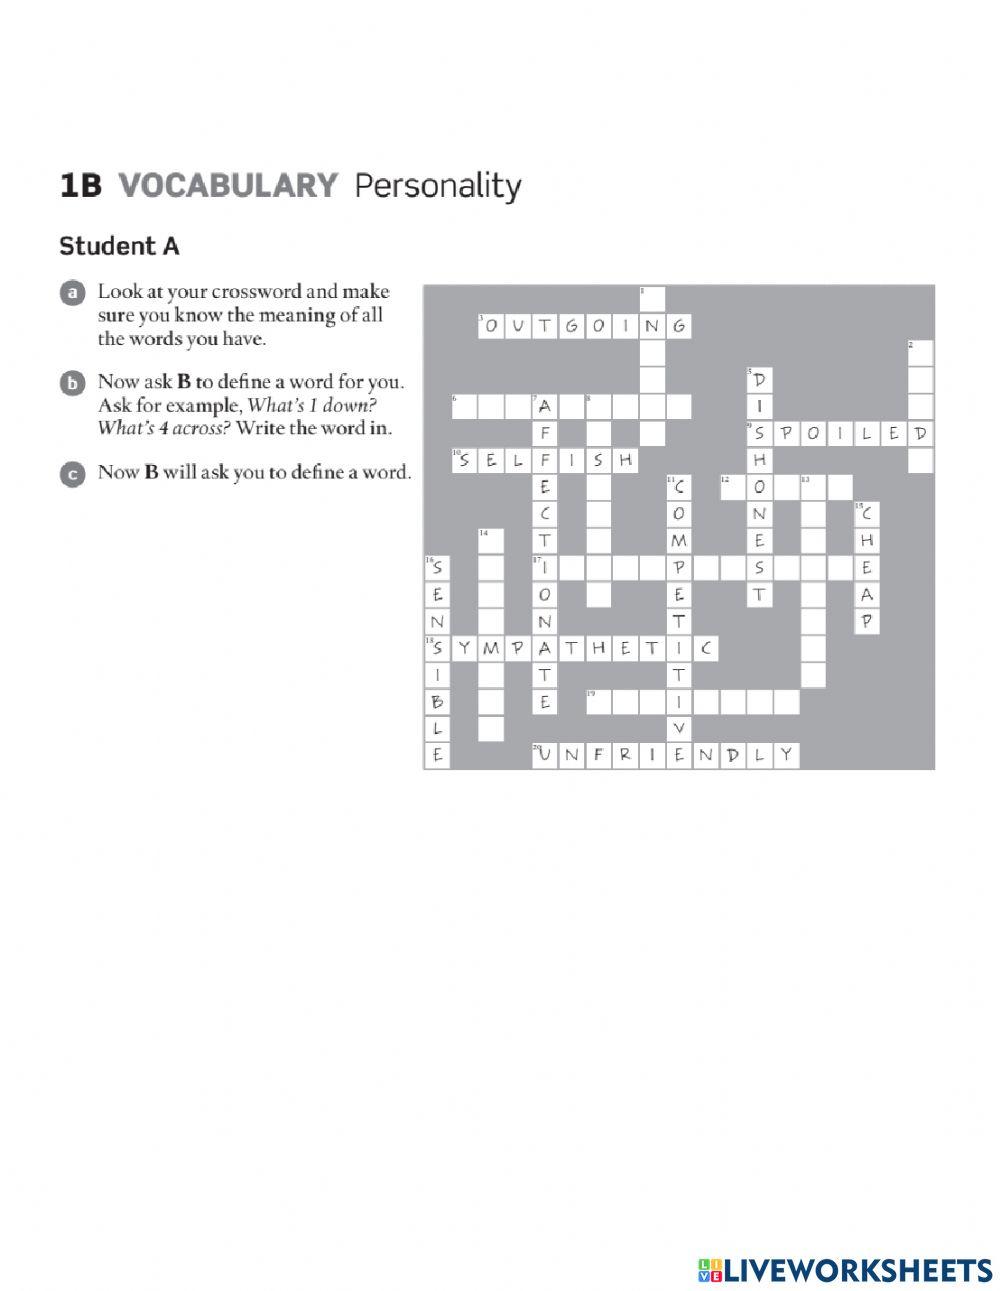 Vocabulary - Personality